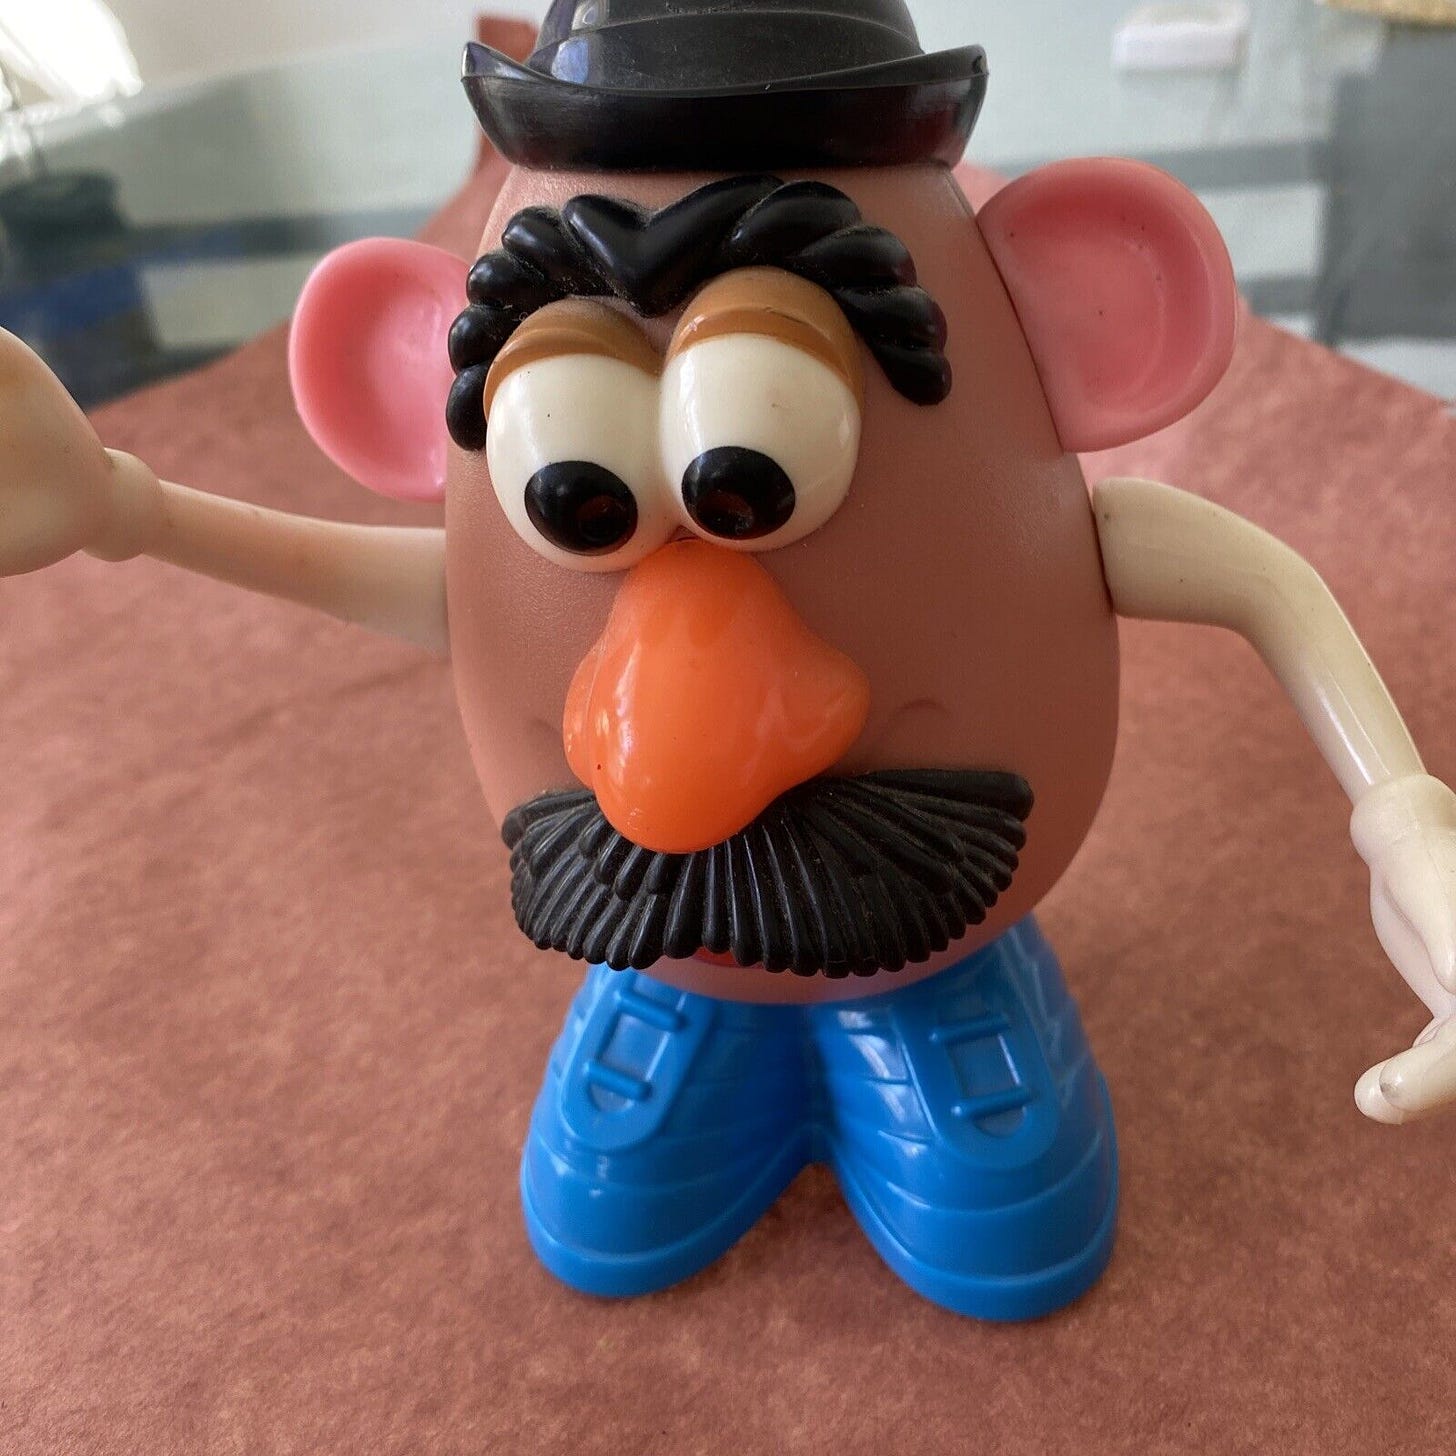 Toys Toy Story Collectable Vintage Mr Potato Head 1990 | eBay